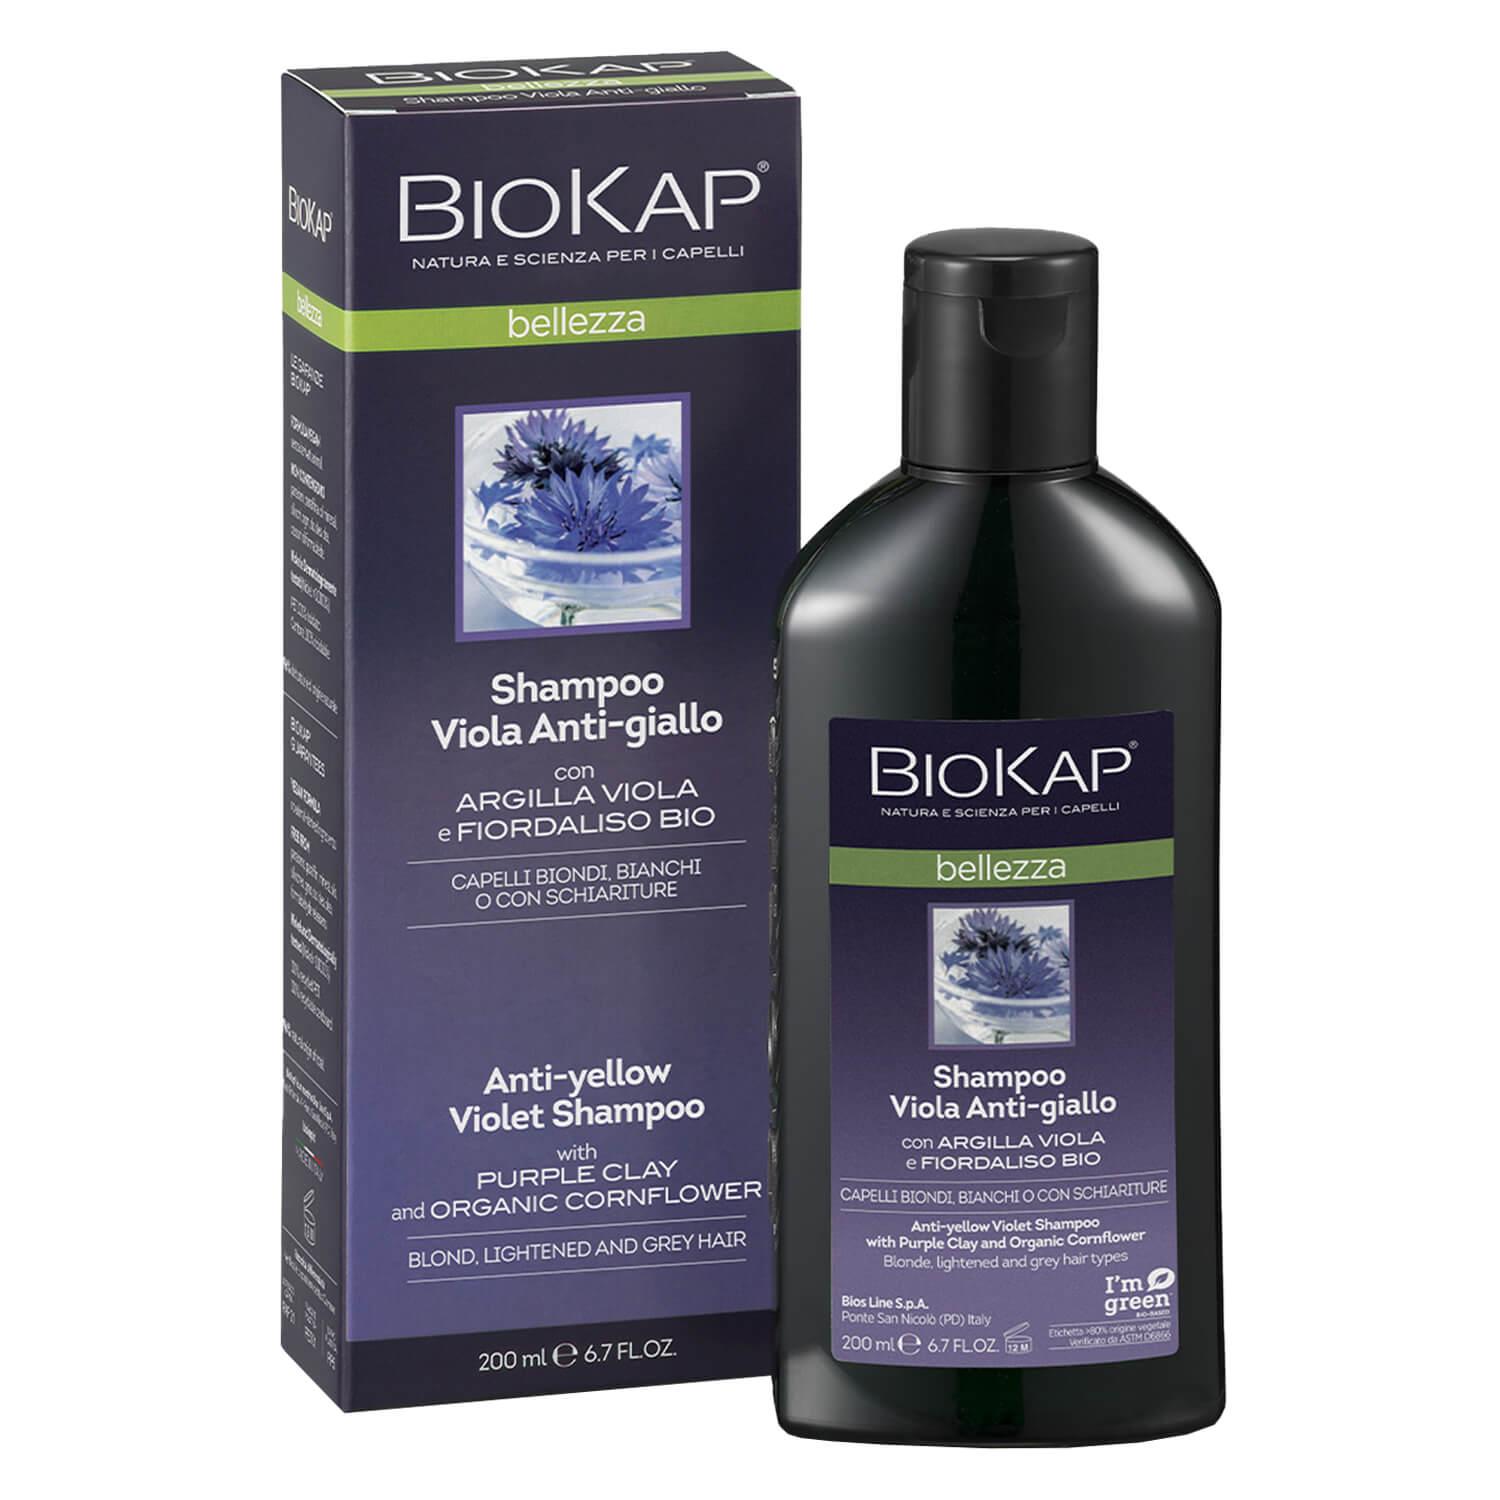 BIOKAP Bellezza - Anti-Yellow Violet Shampoo